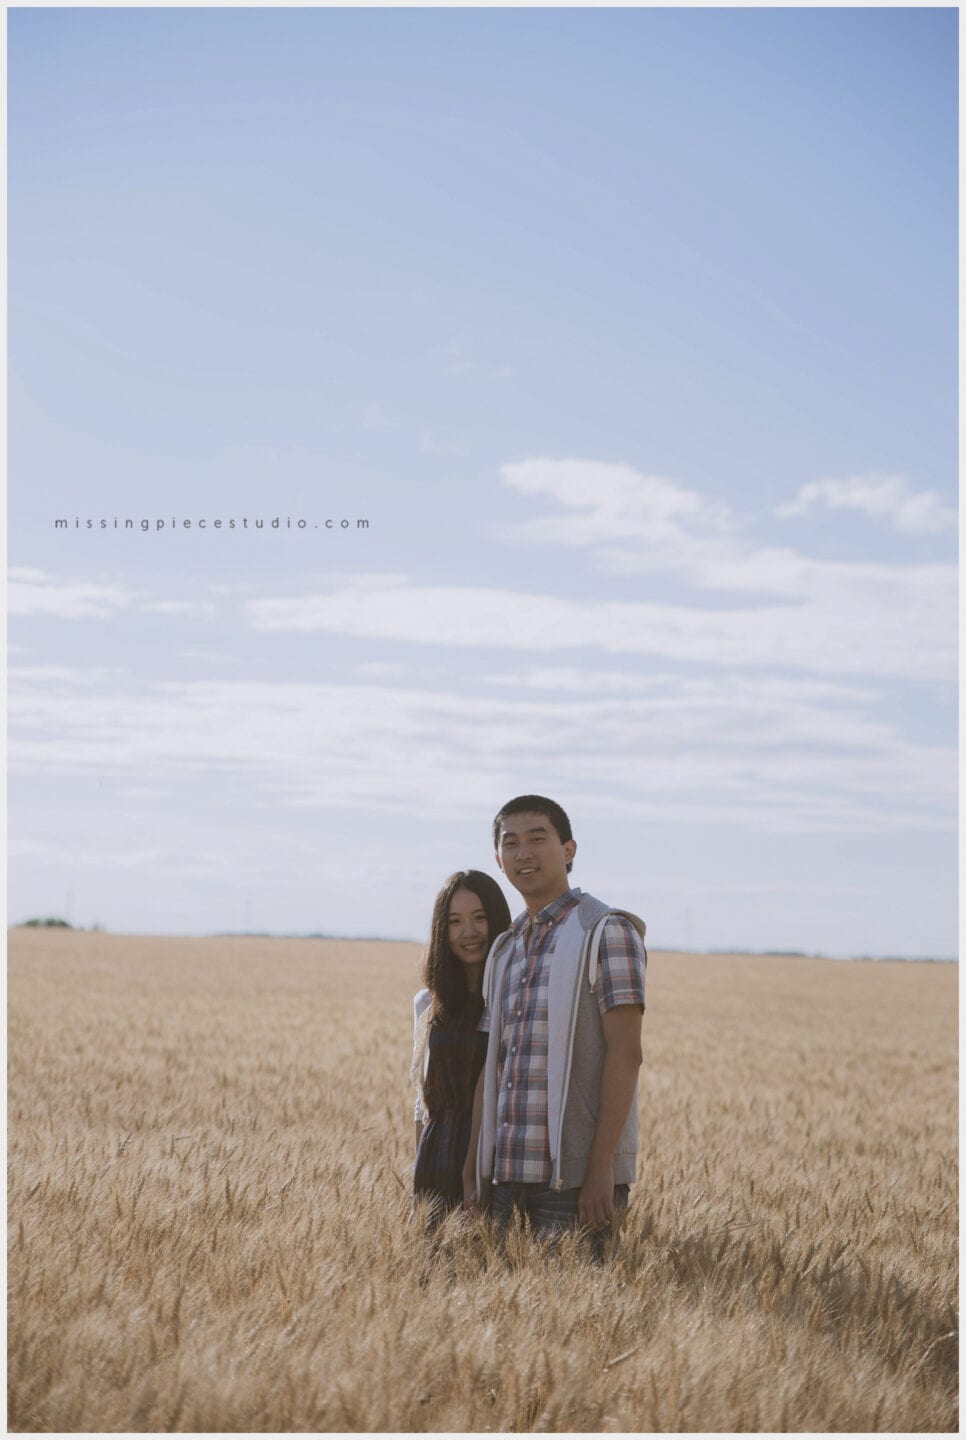 Calgary Photographer captures beautiful photo of Wheat field in Edmonton